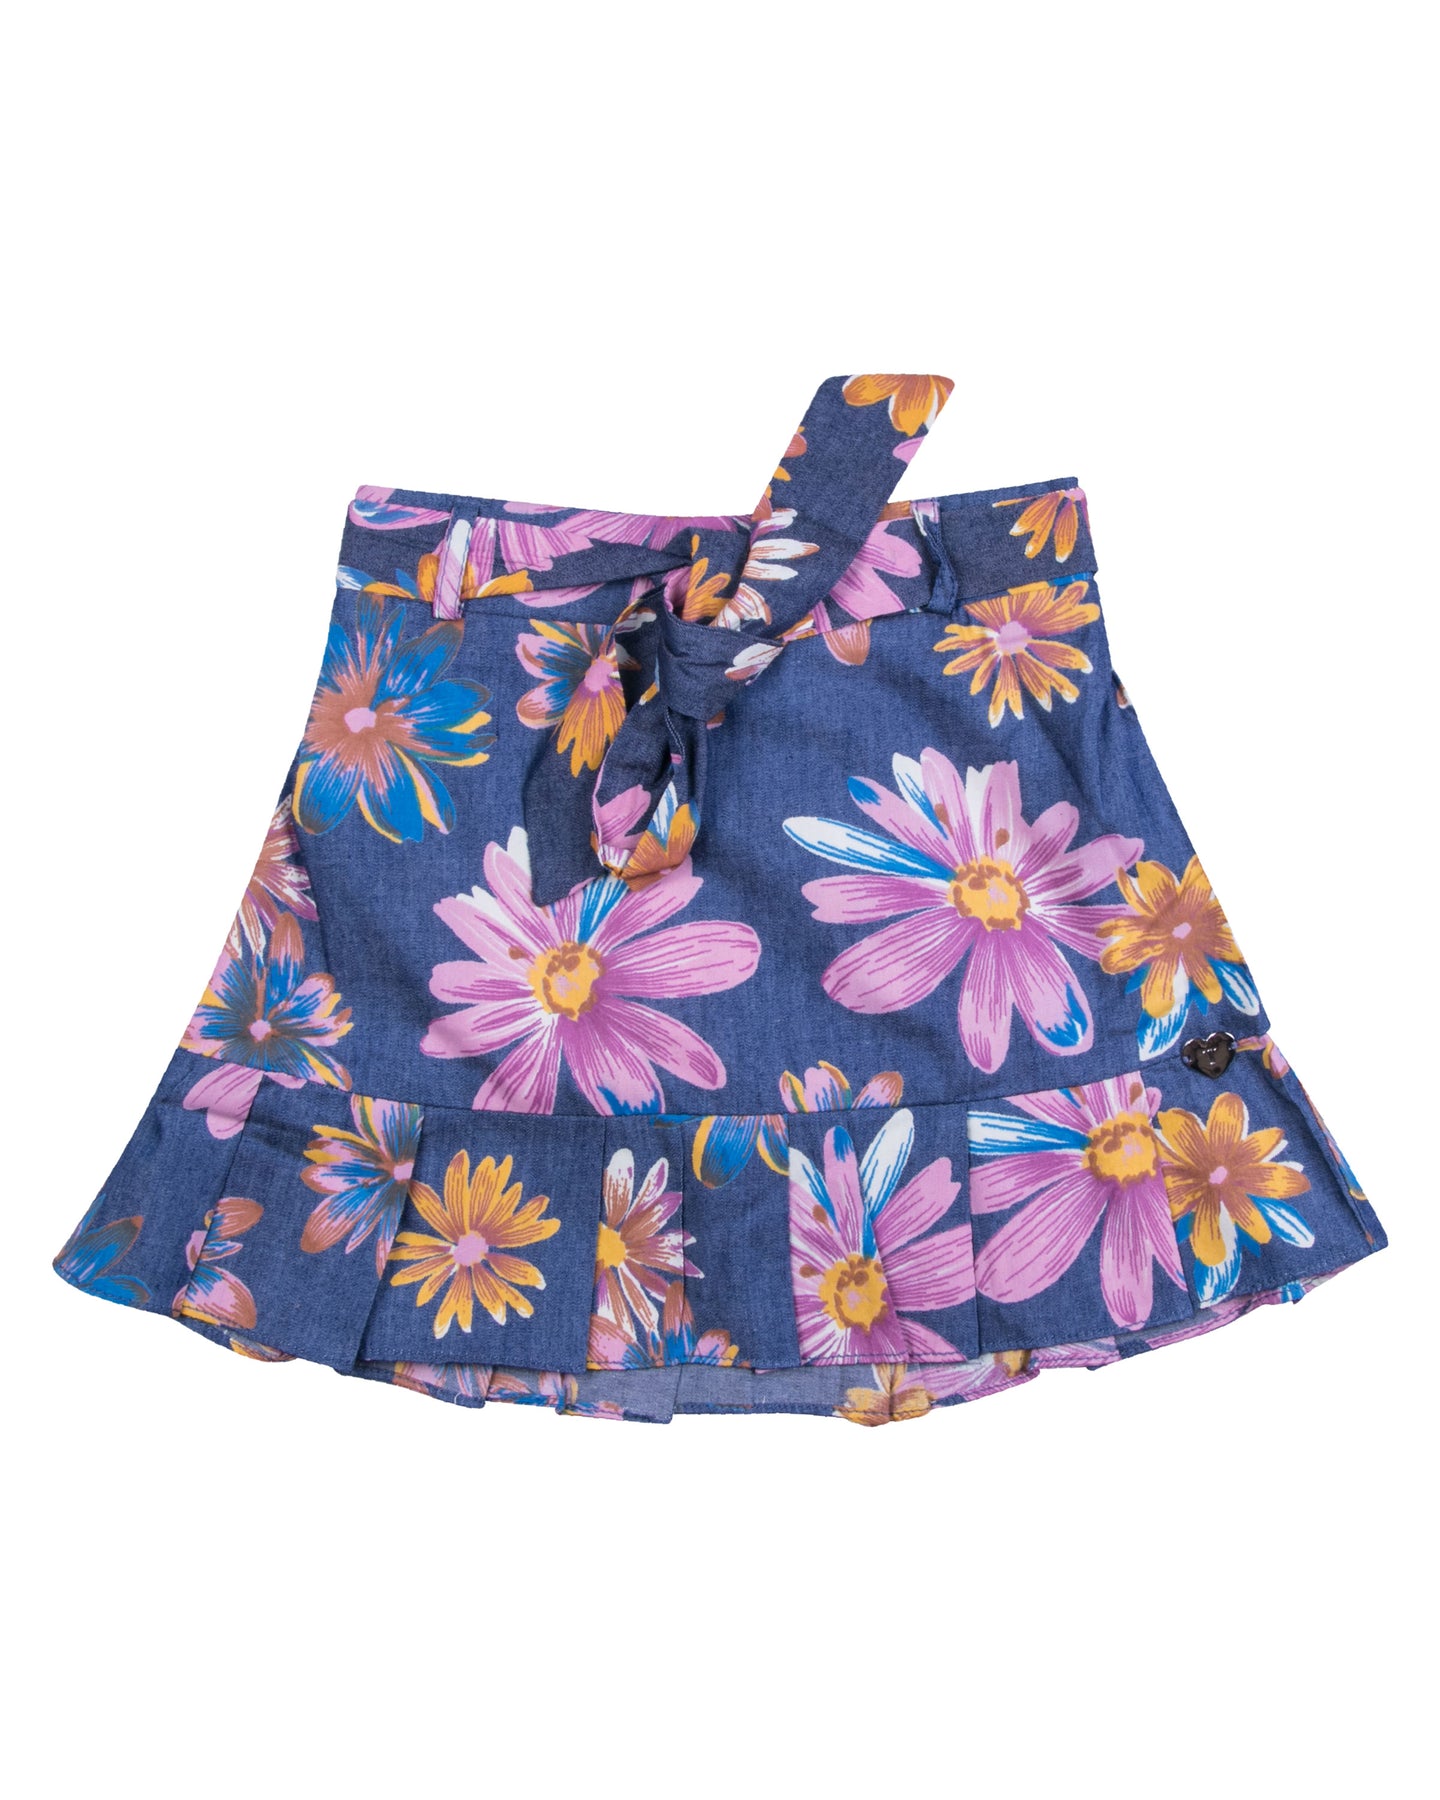 Girls Floral Printed Blue Short Skirt